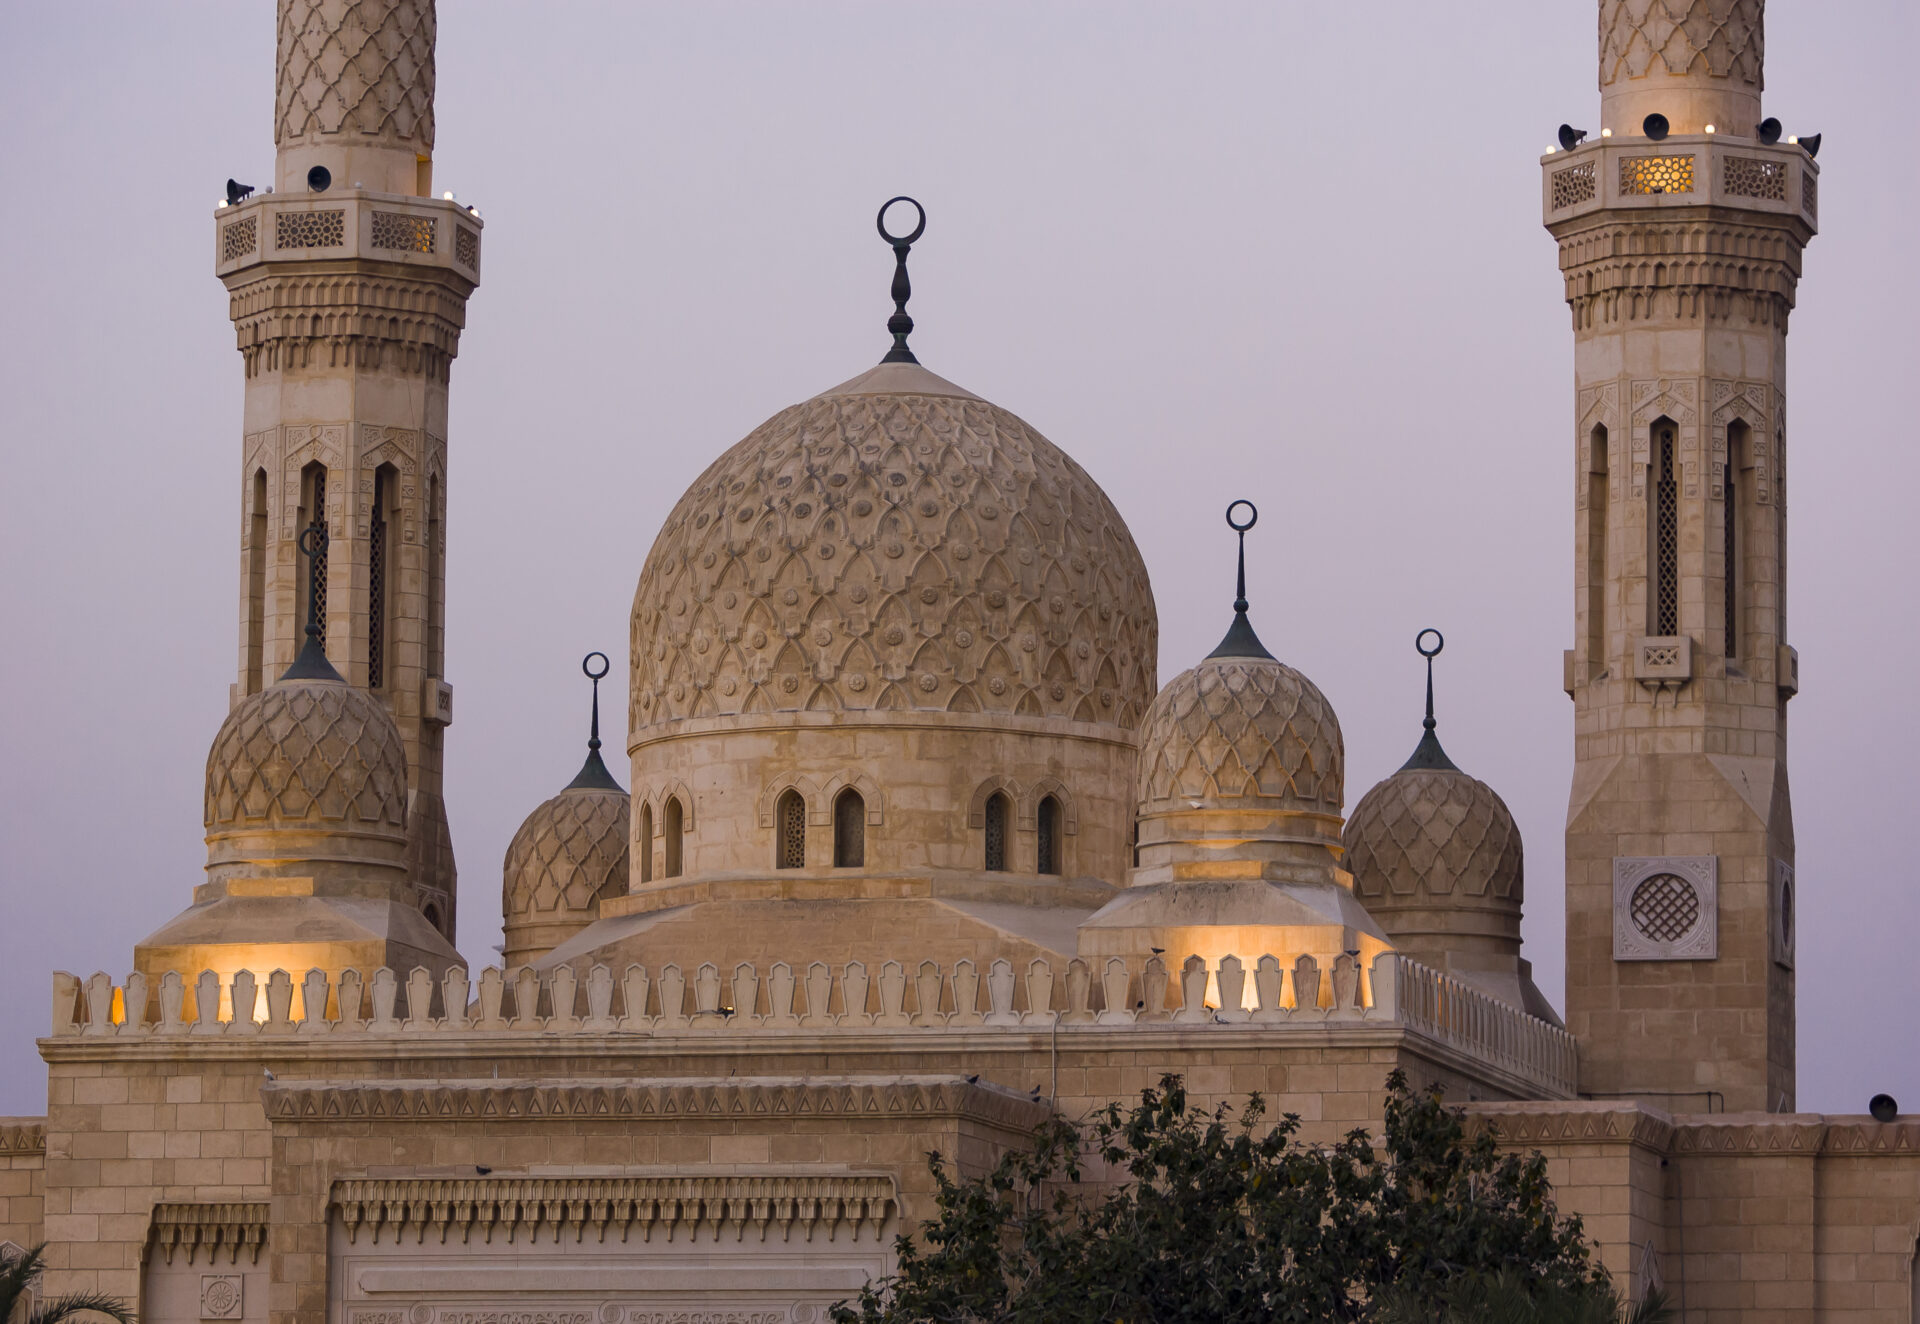 Jumeirah Mosque Dubai - Domes and minarets